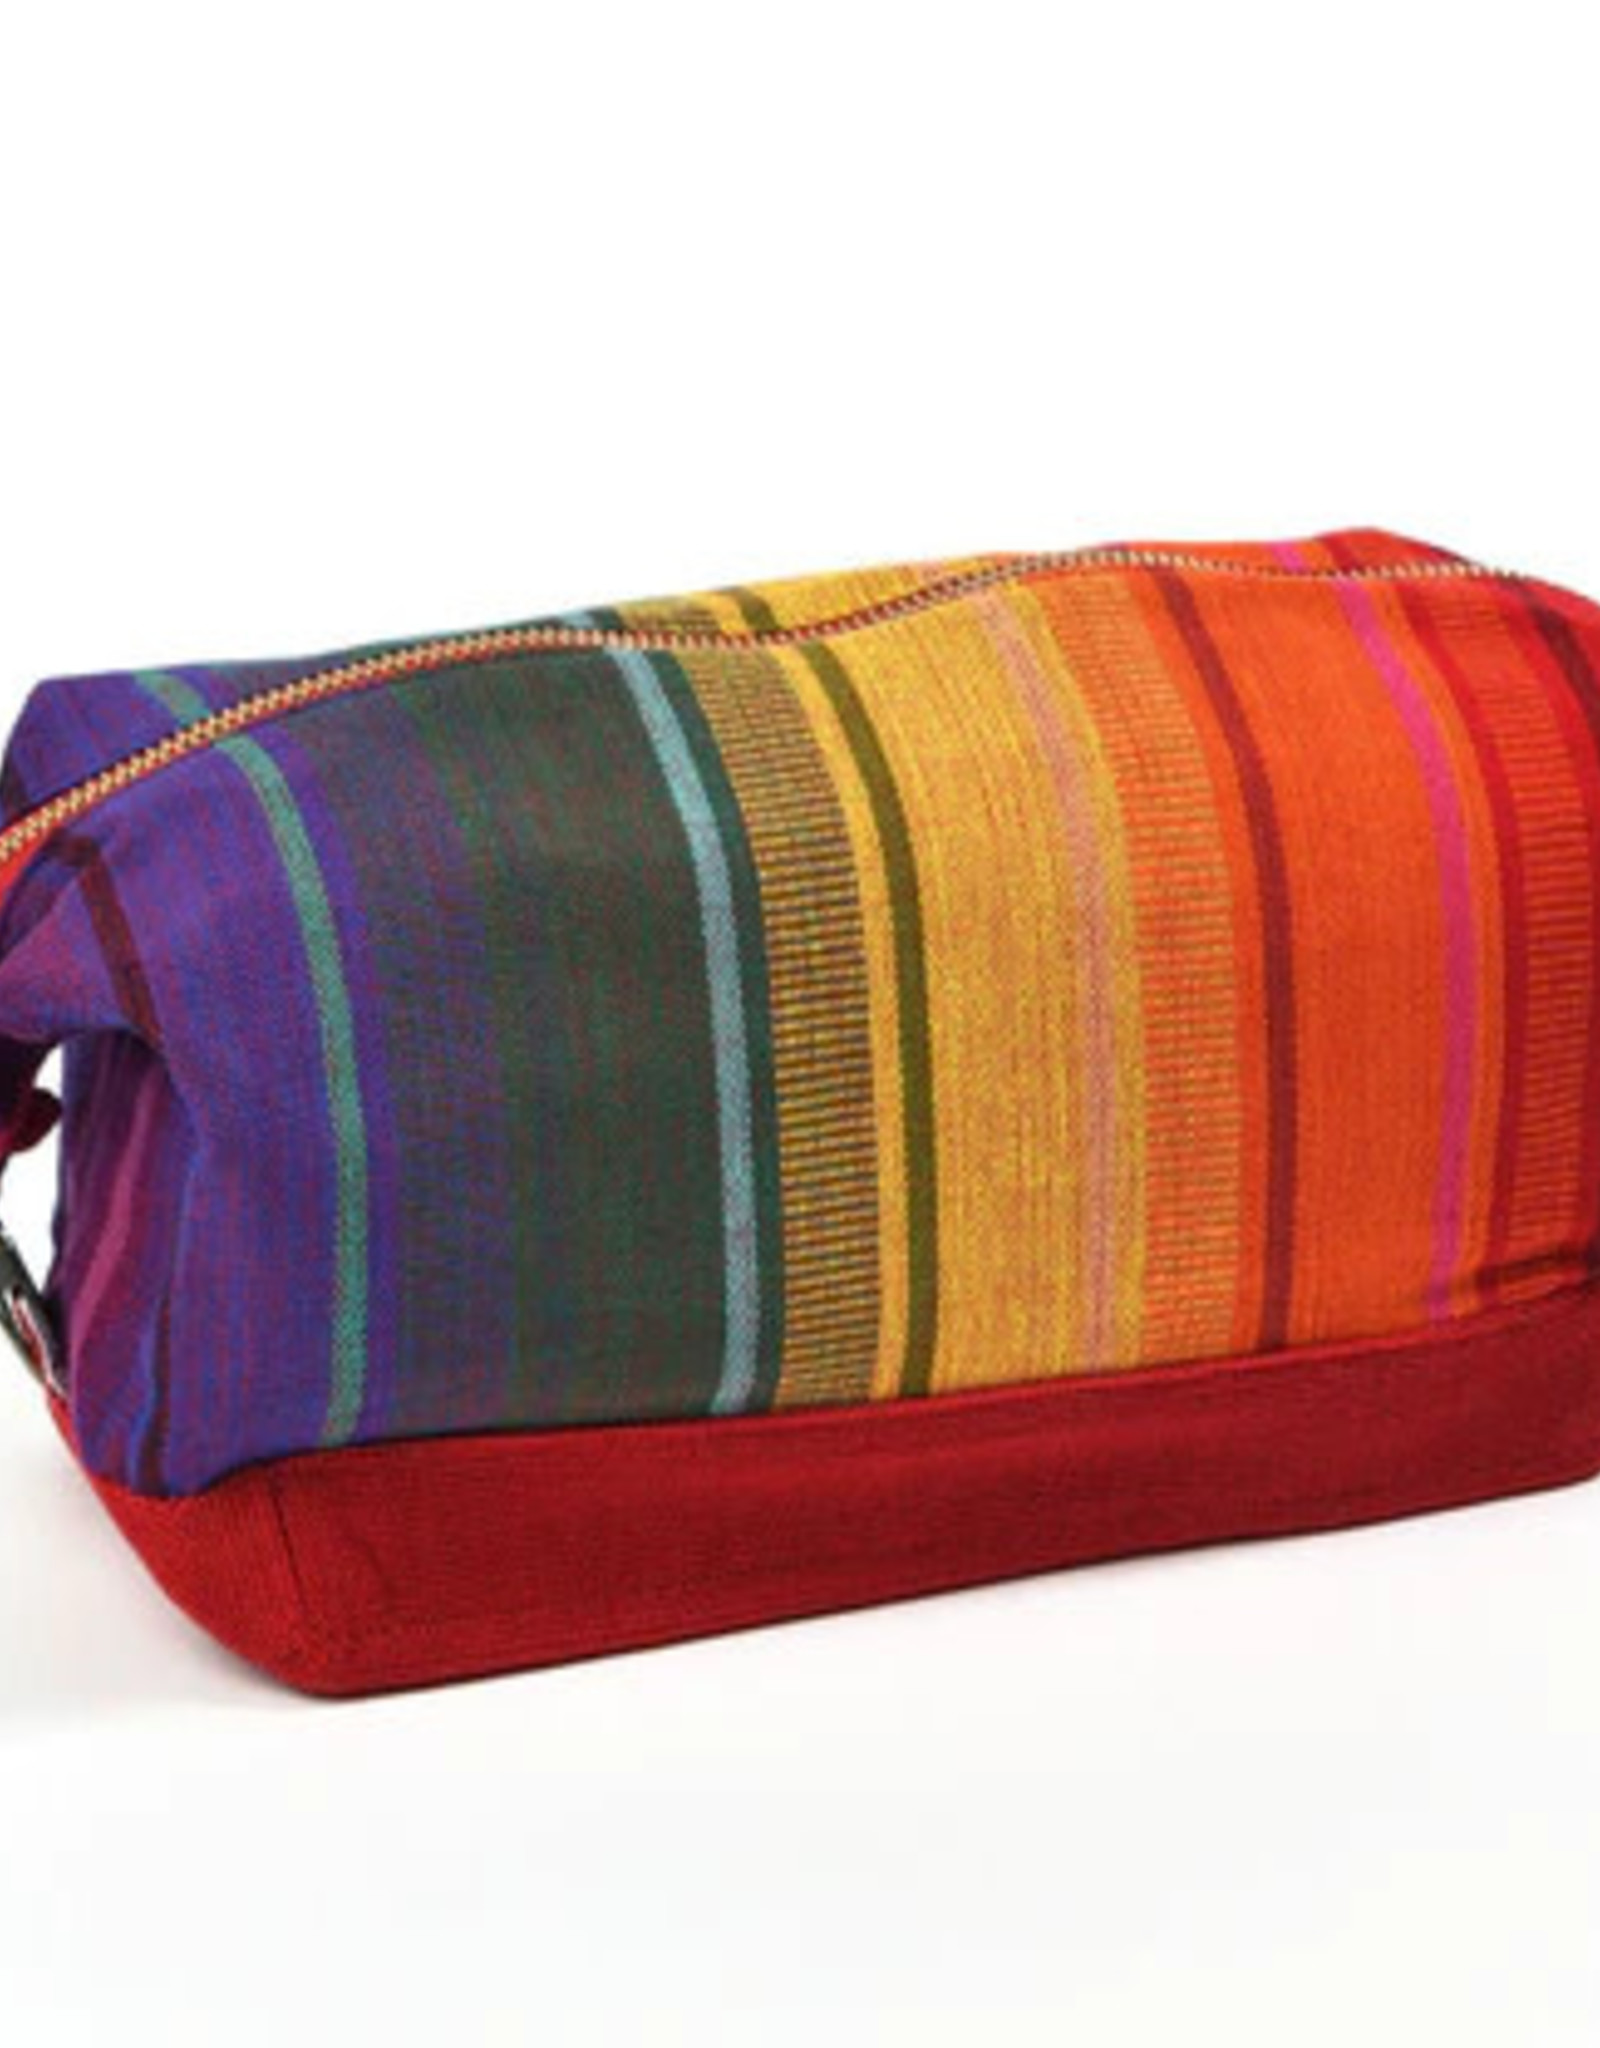 Mayamam Weavers Hand Woven Bright Striped Toiletry Bags  - Sunrise